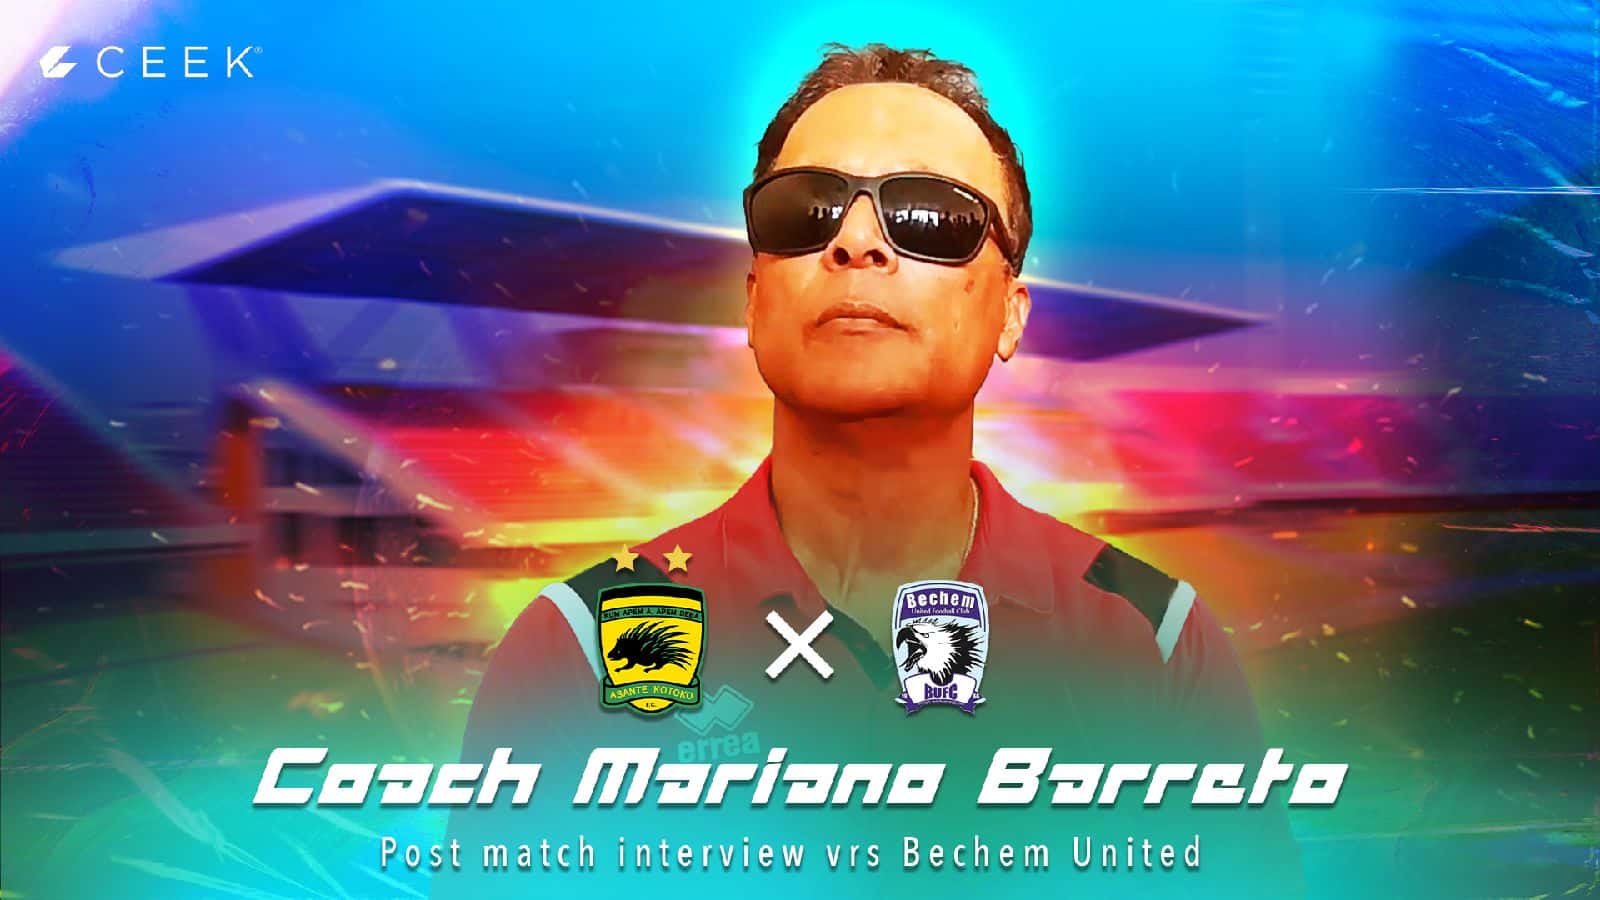 Head Coach Mariano Barreto Post match interview vrs Bechem United